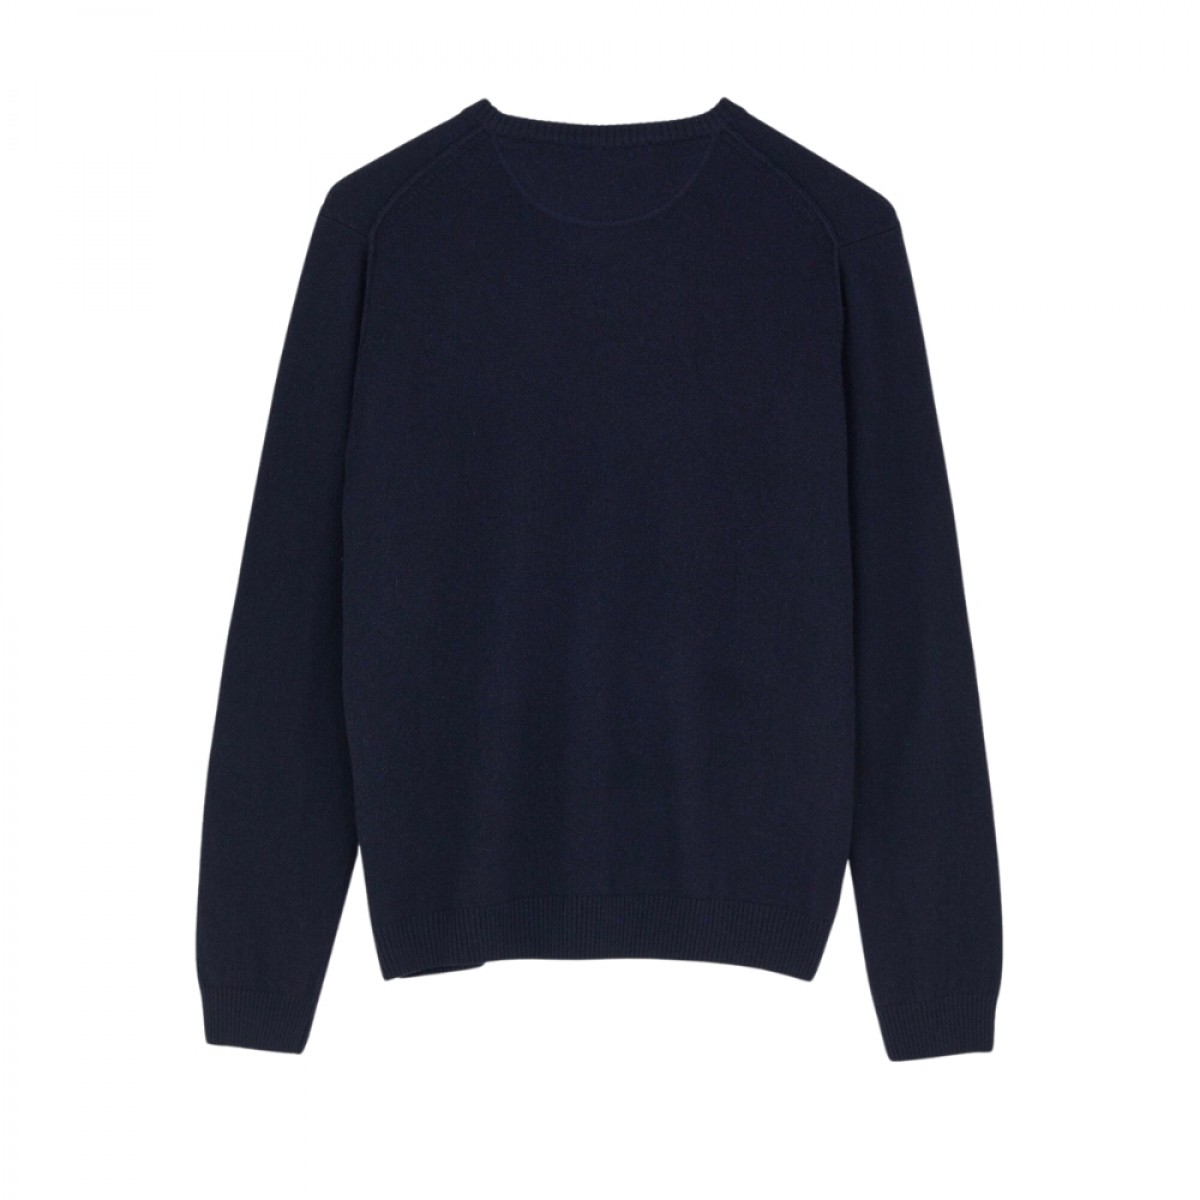 leonardo cashmere sweater - black blue - ryg